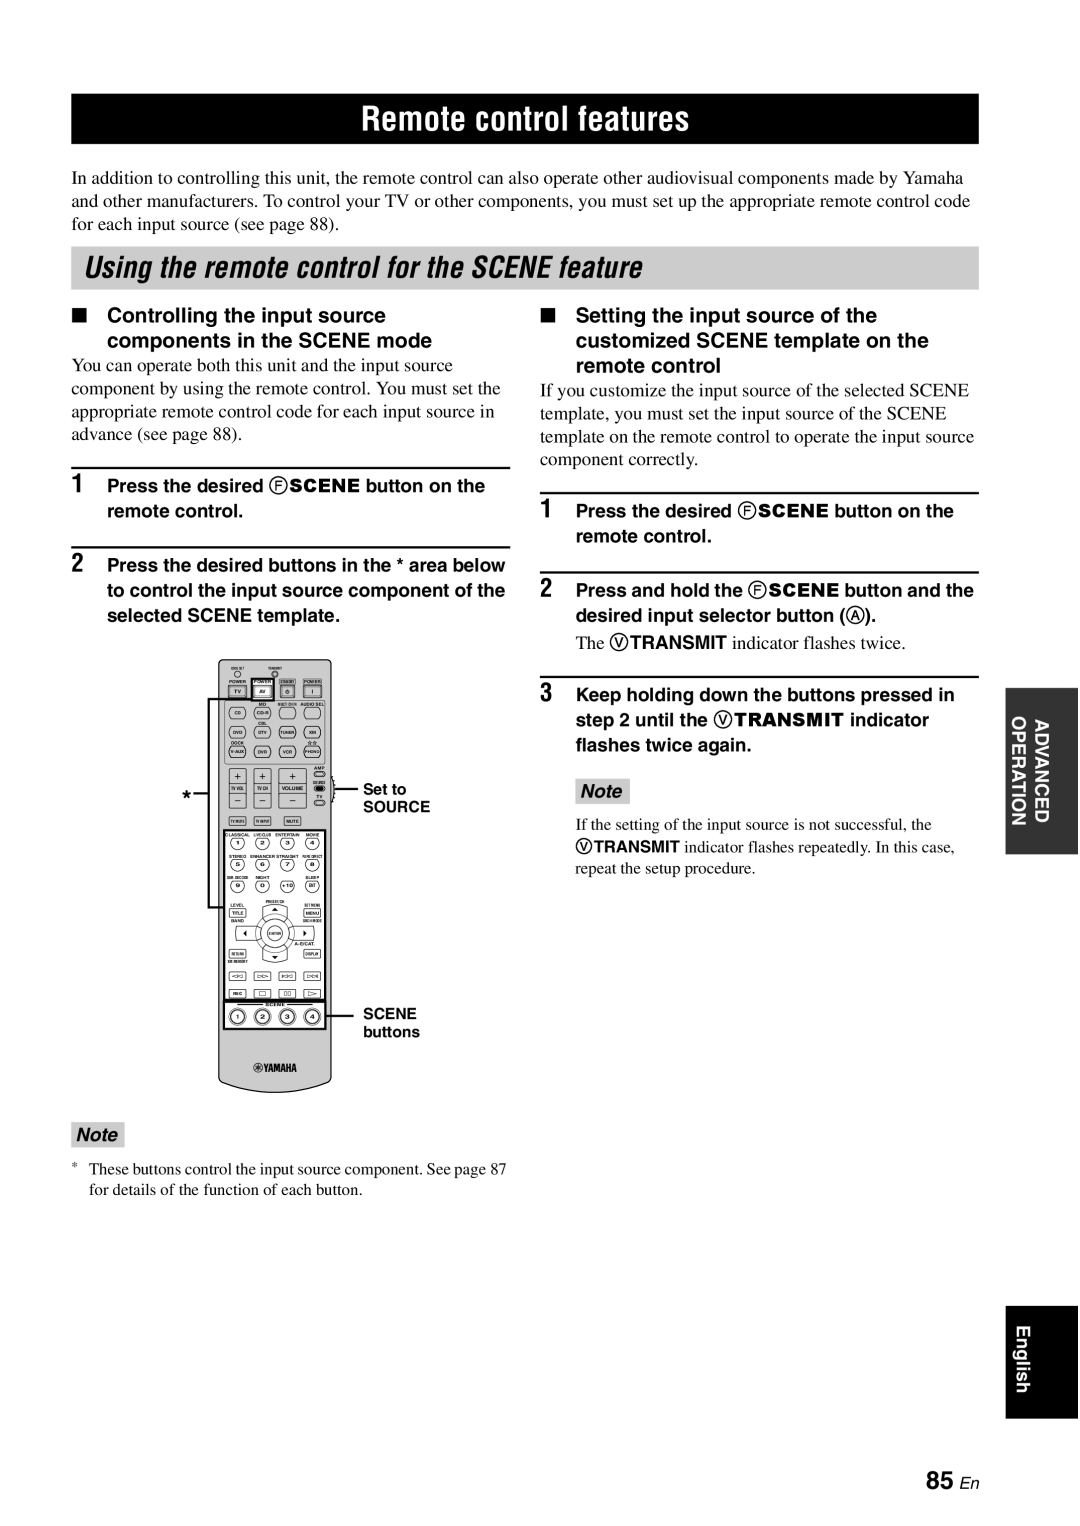 Yamaha HTR-6080 owner manual Remote control features, Using the remote control for the SCENE feature, 85 En 